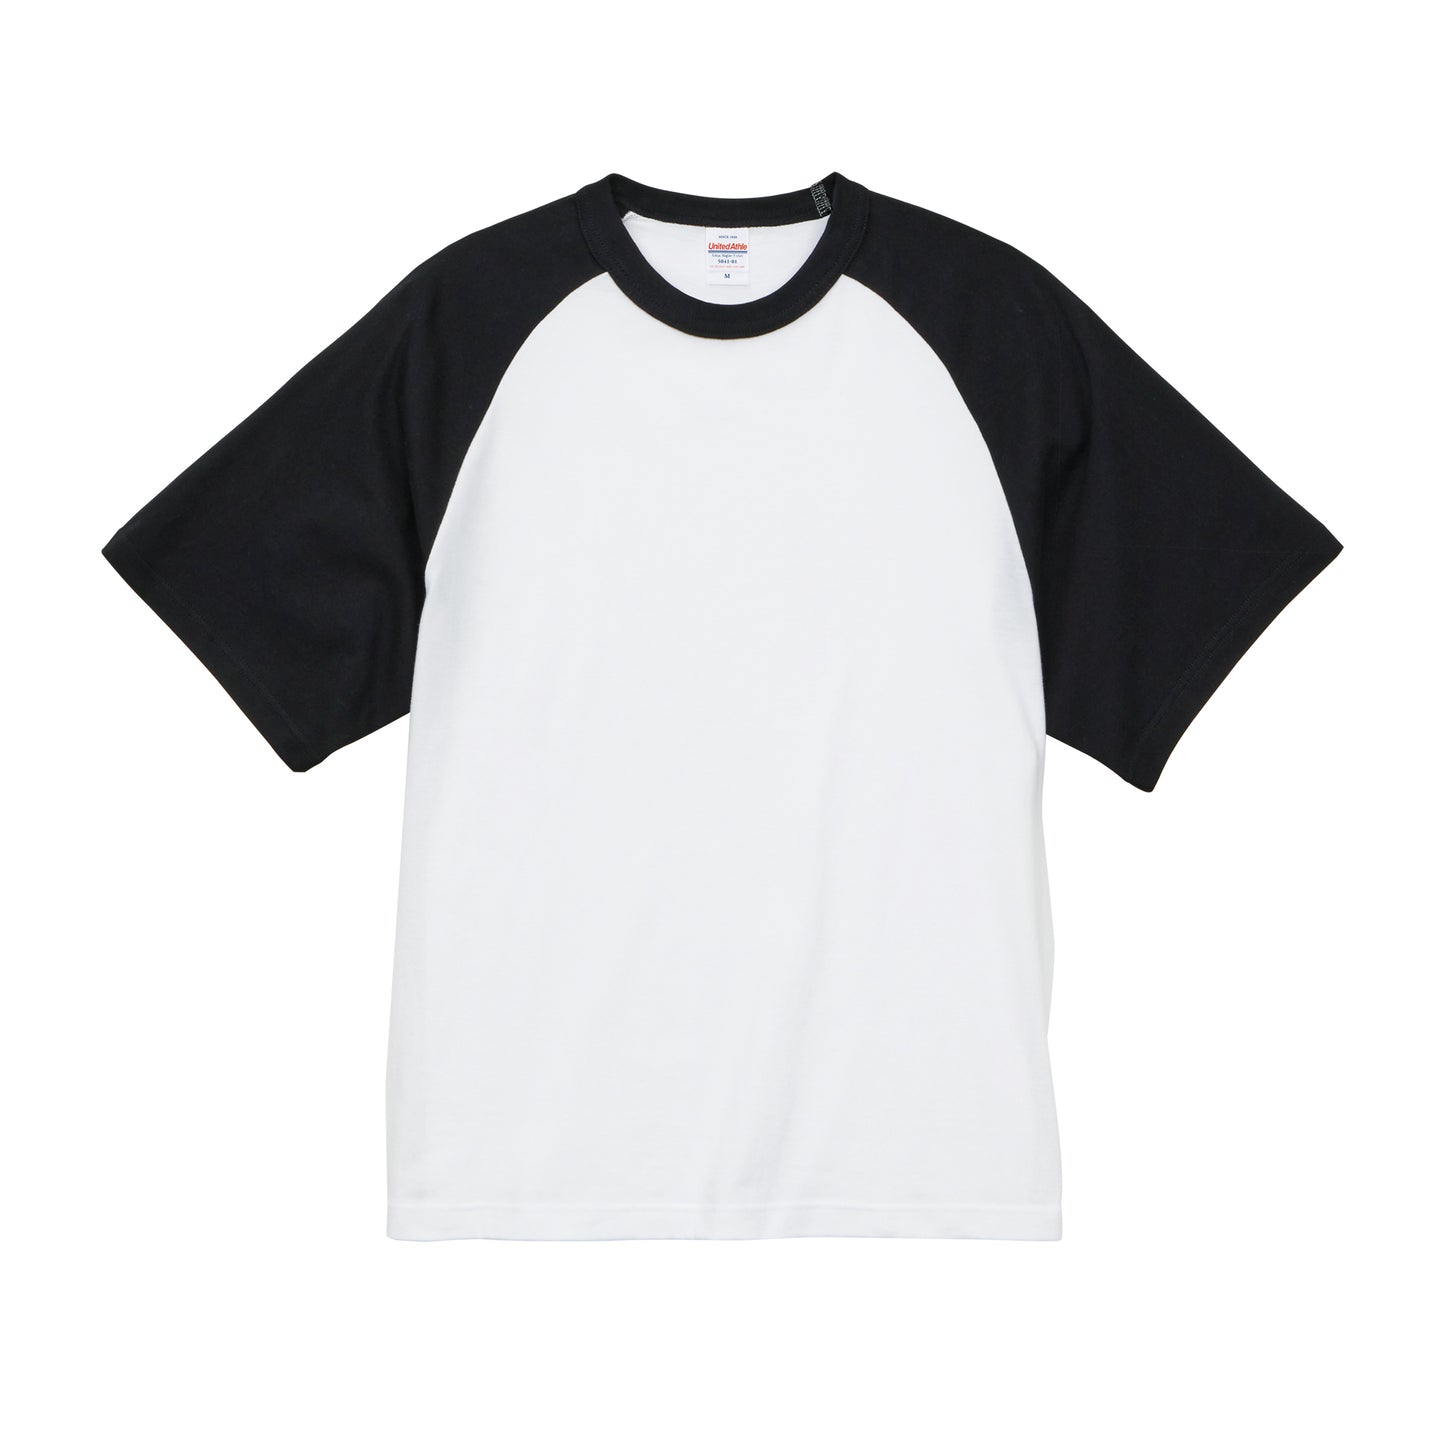 5.6oz ラグラン Tシャツ (UA-5041-01 )